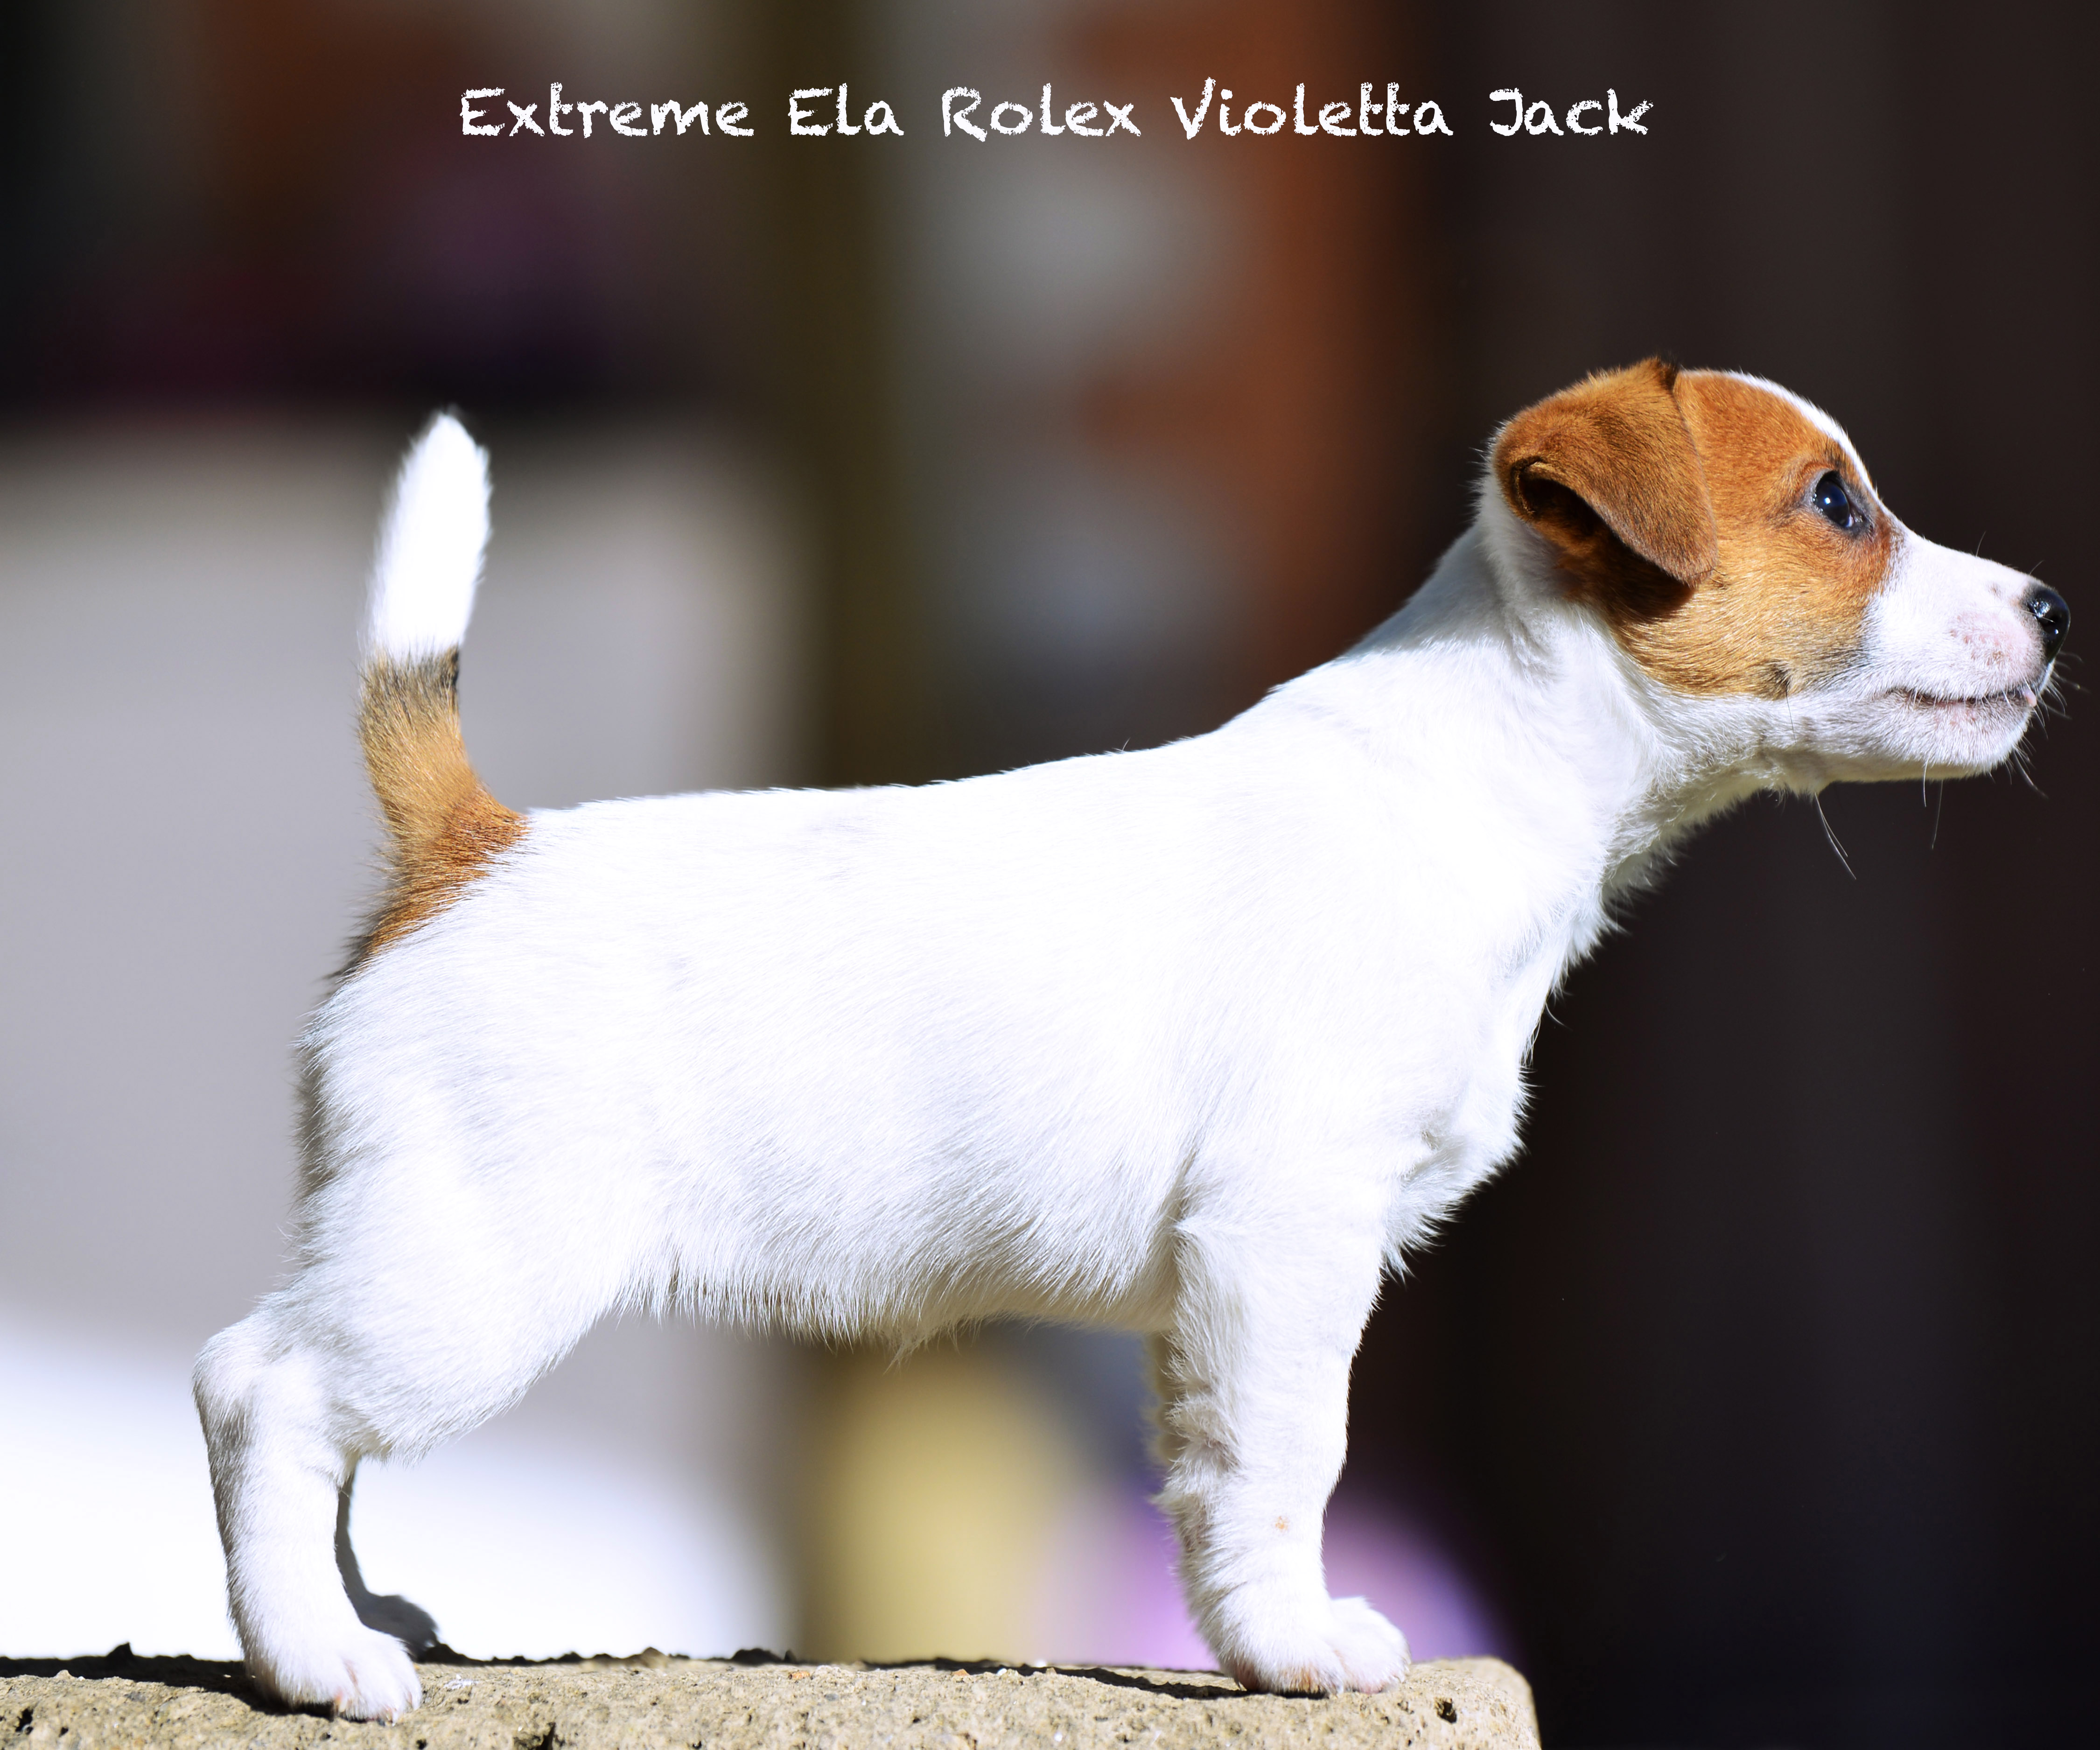  Extreme Ela Rolex Violetta Jack